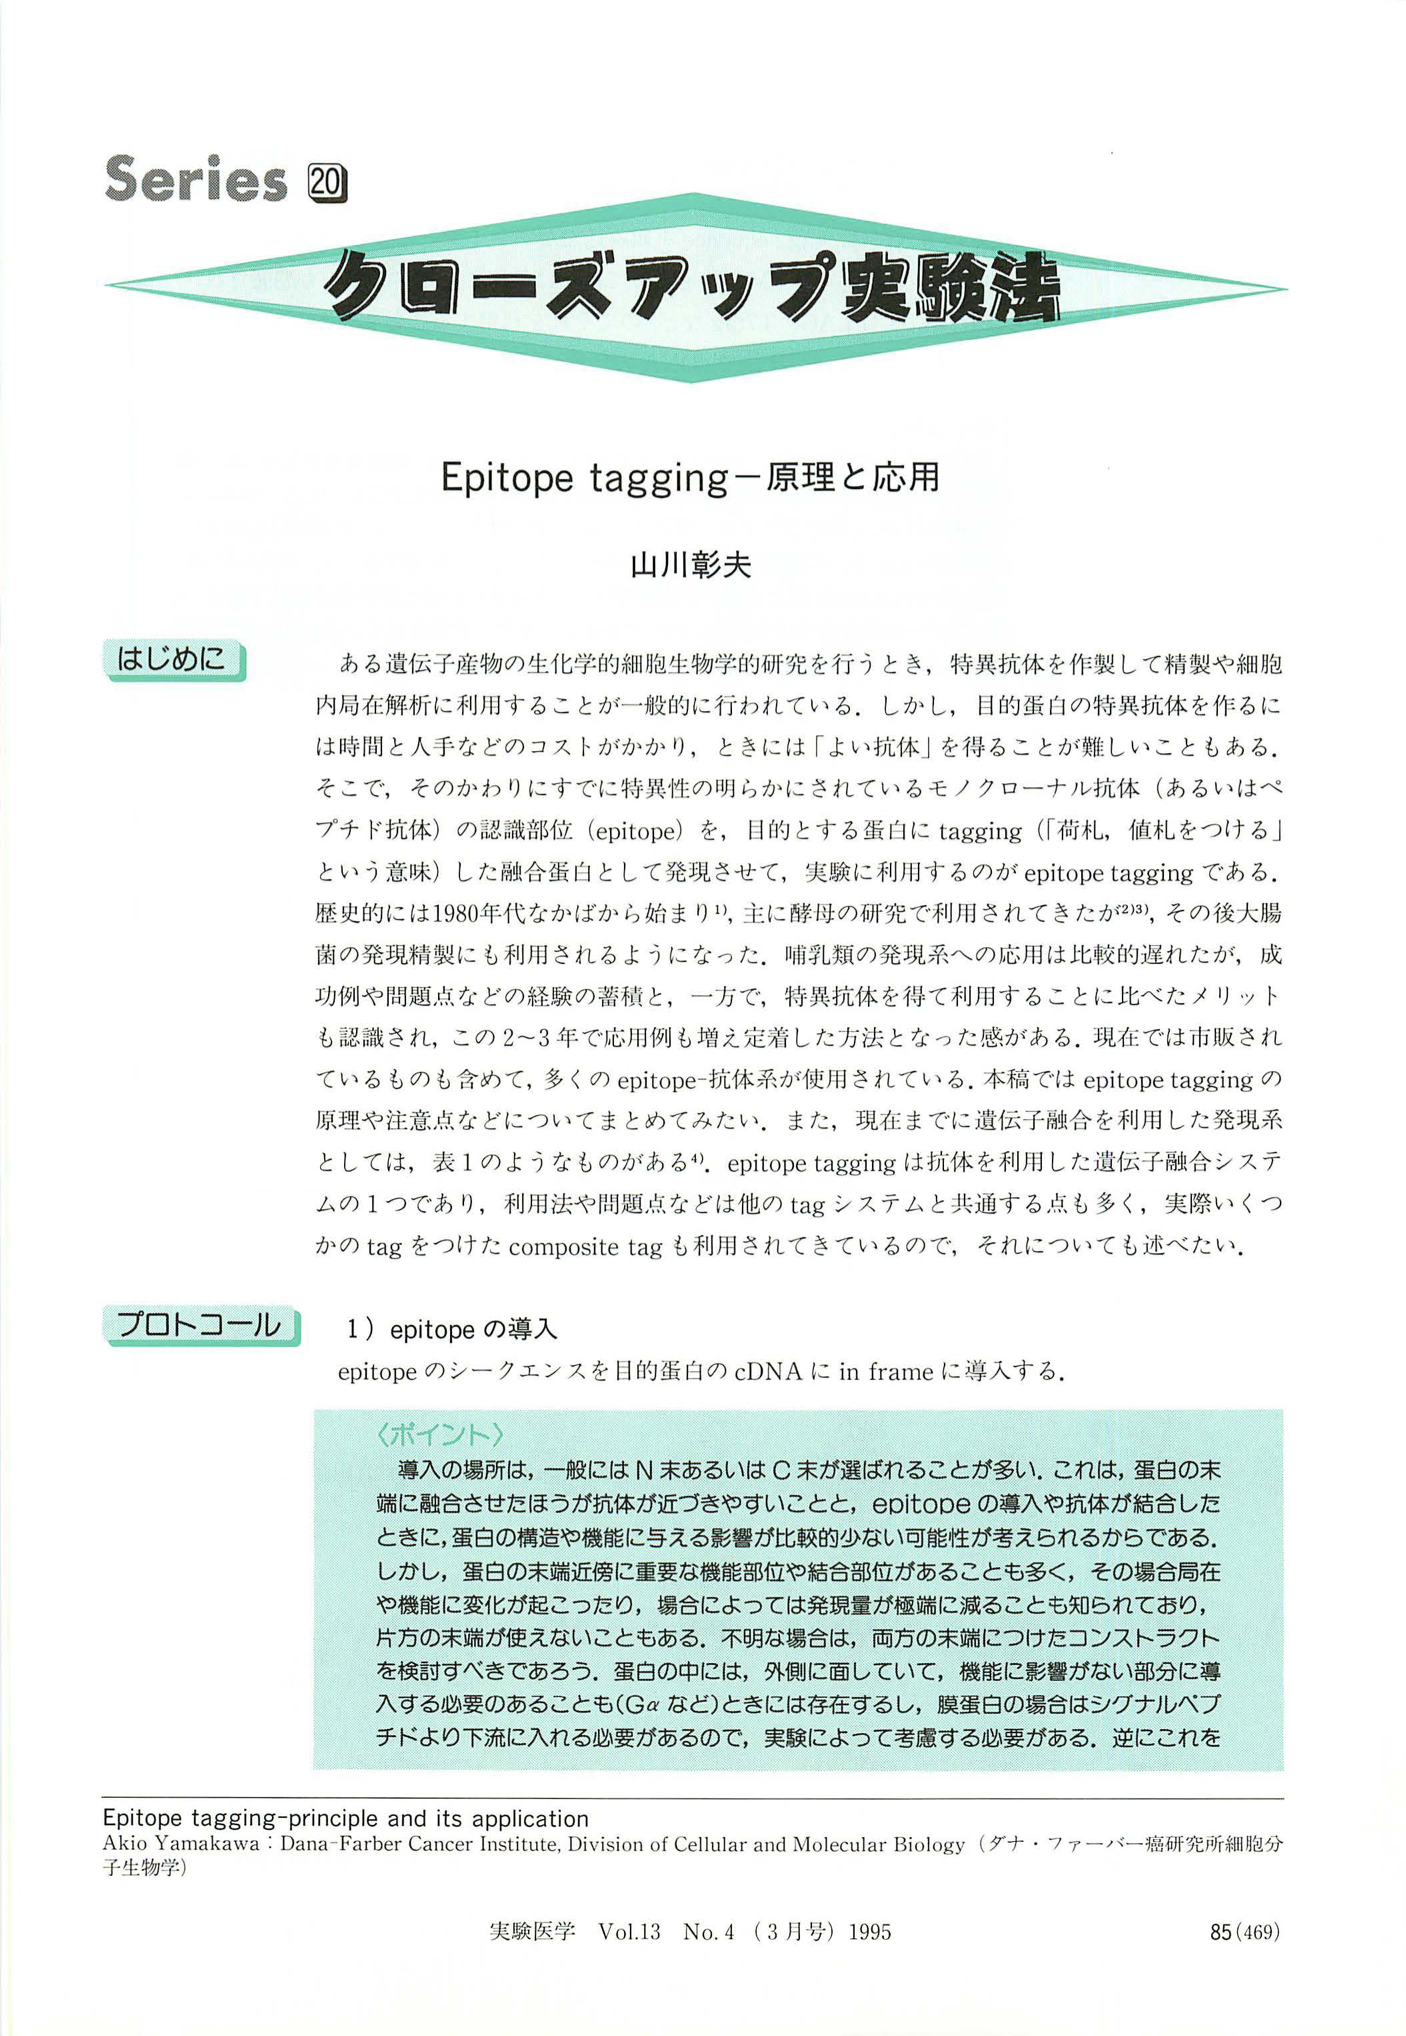 Epitope tagging−原理と応用